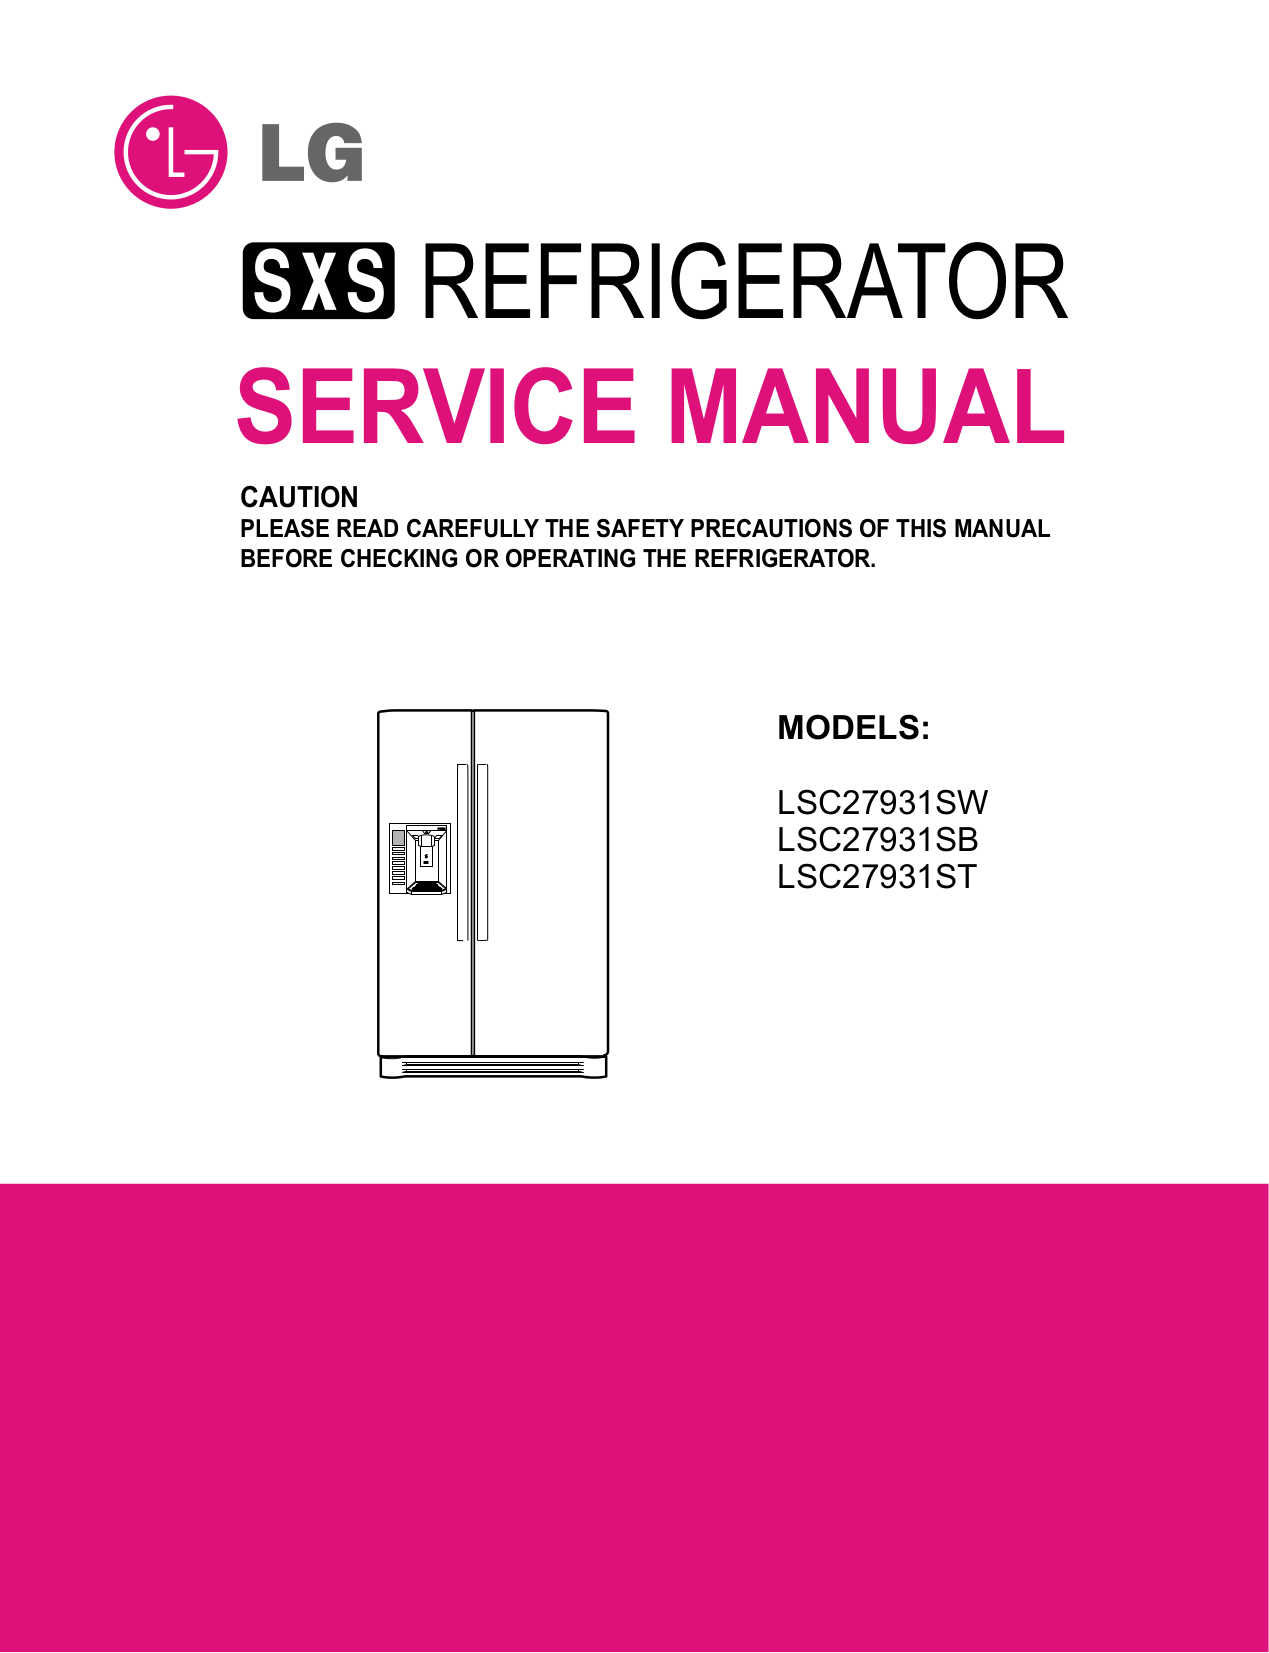 Download free pdf for LG LSC27931ST Refrigerator manual